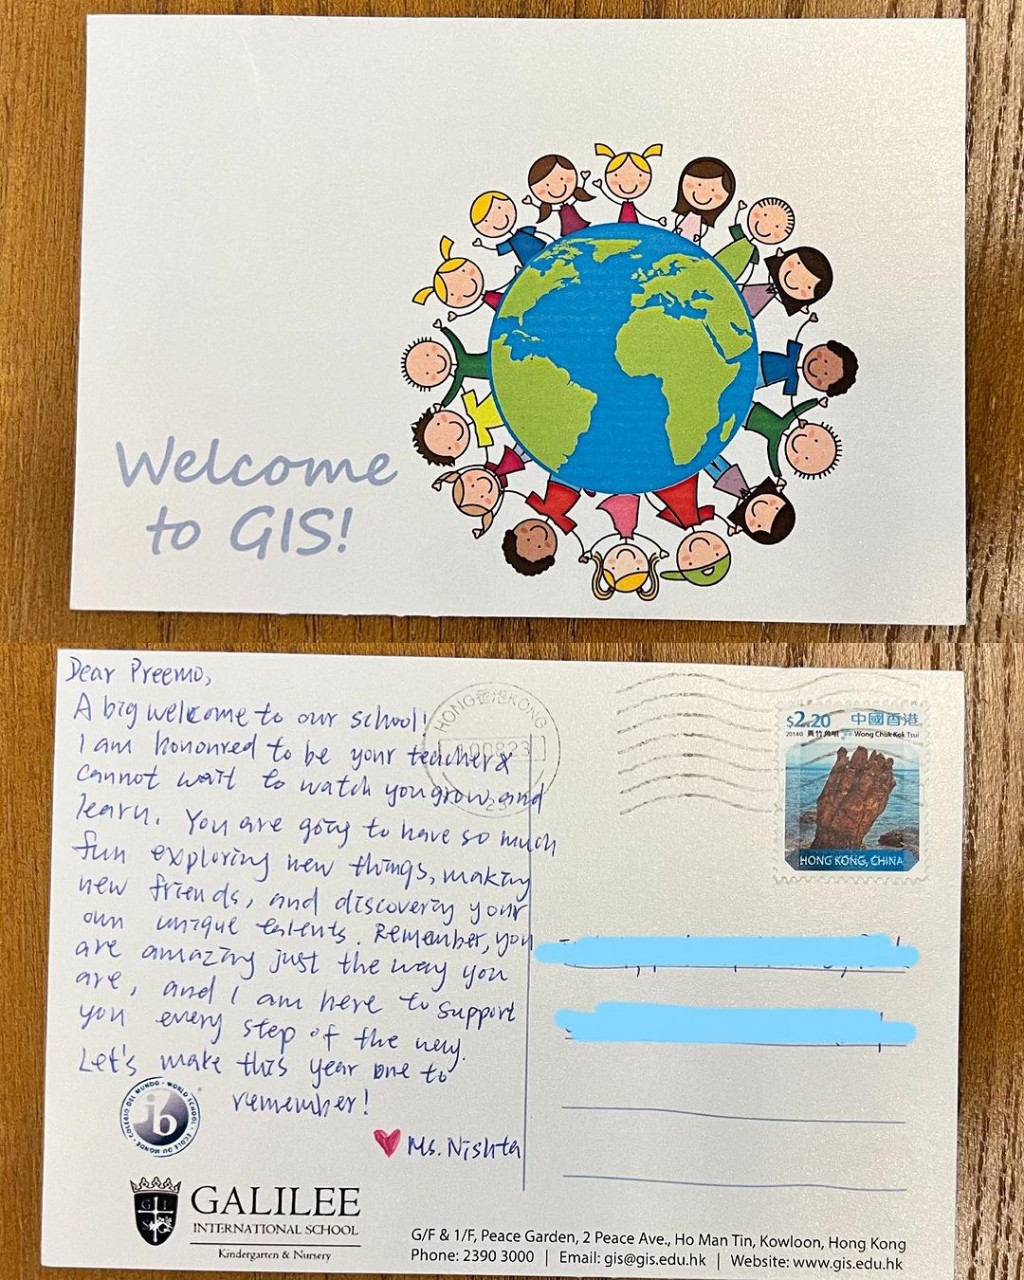 Patrick Sir晒出老师于开学前寄给囝囝Preemo的明信片。